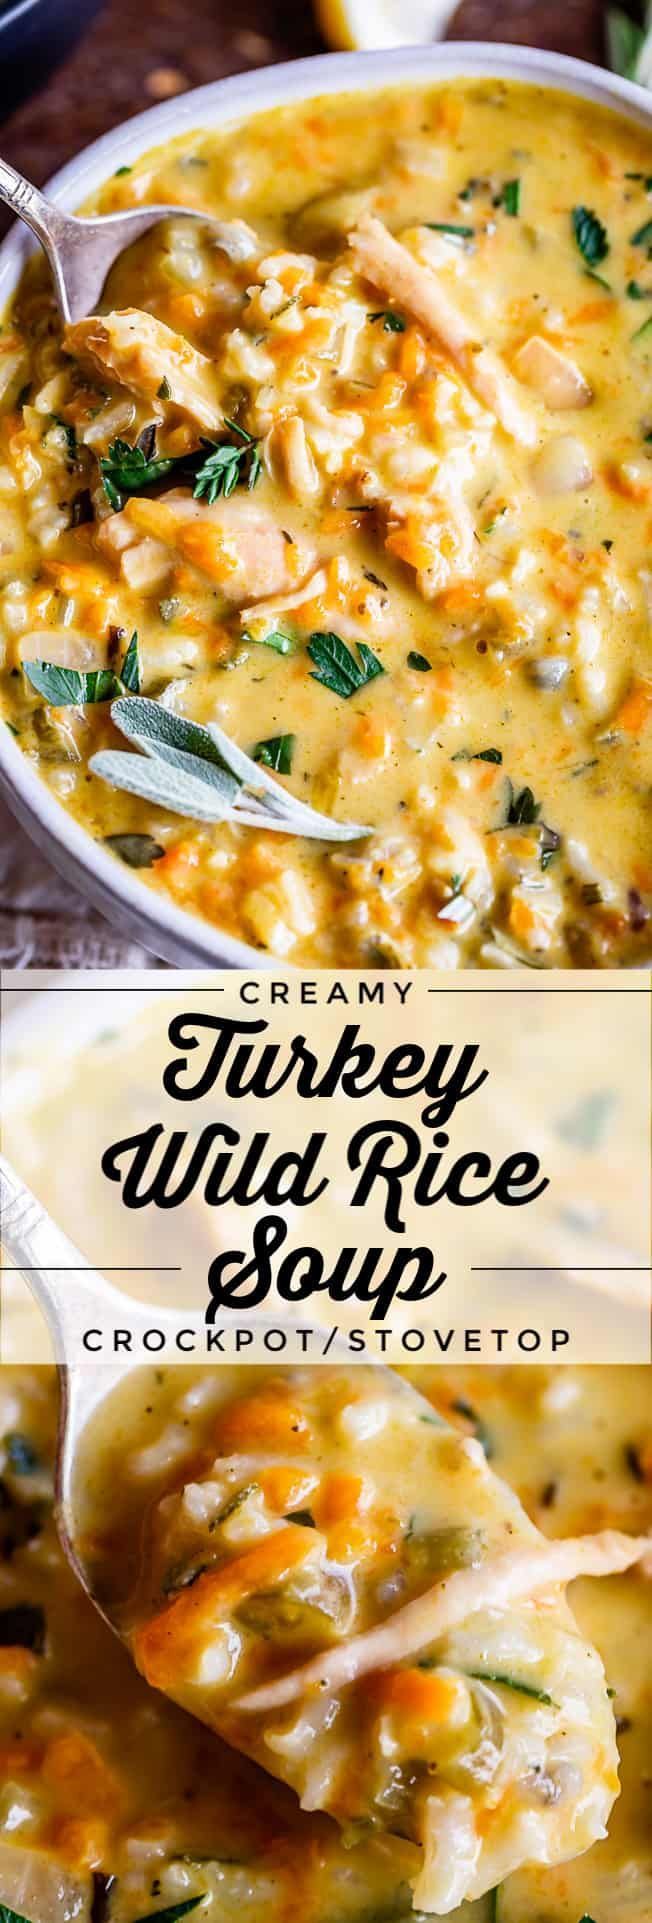 Creamy Turkey Wild Rice Soup recipe from The Food Charlatan -   19 turkey soup crockpot leftover ideas